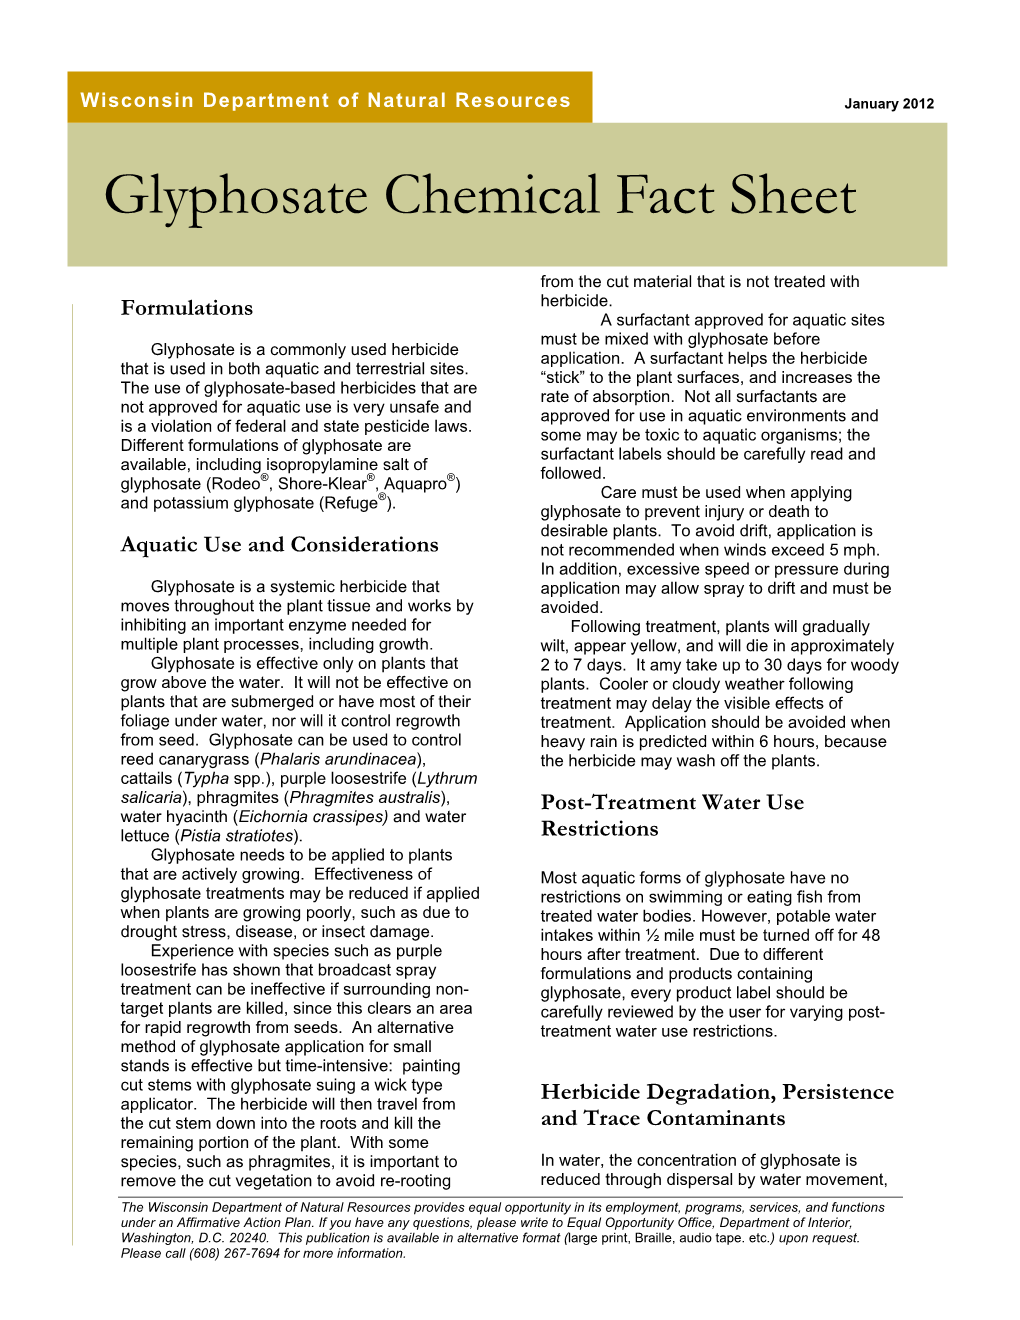 Glyphosate Chemical Fact Sheet